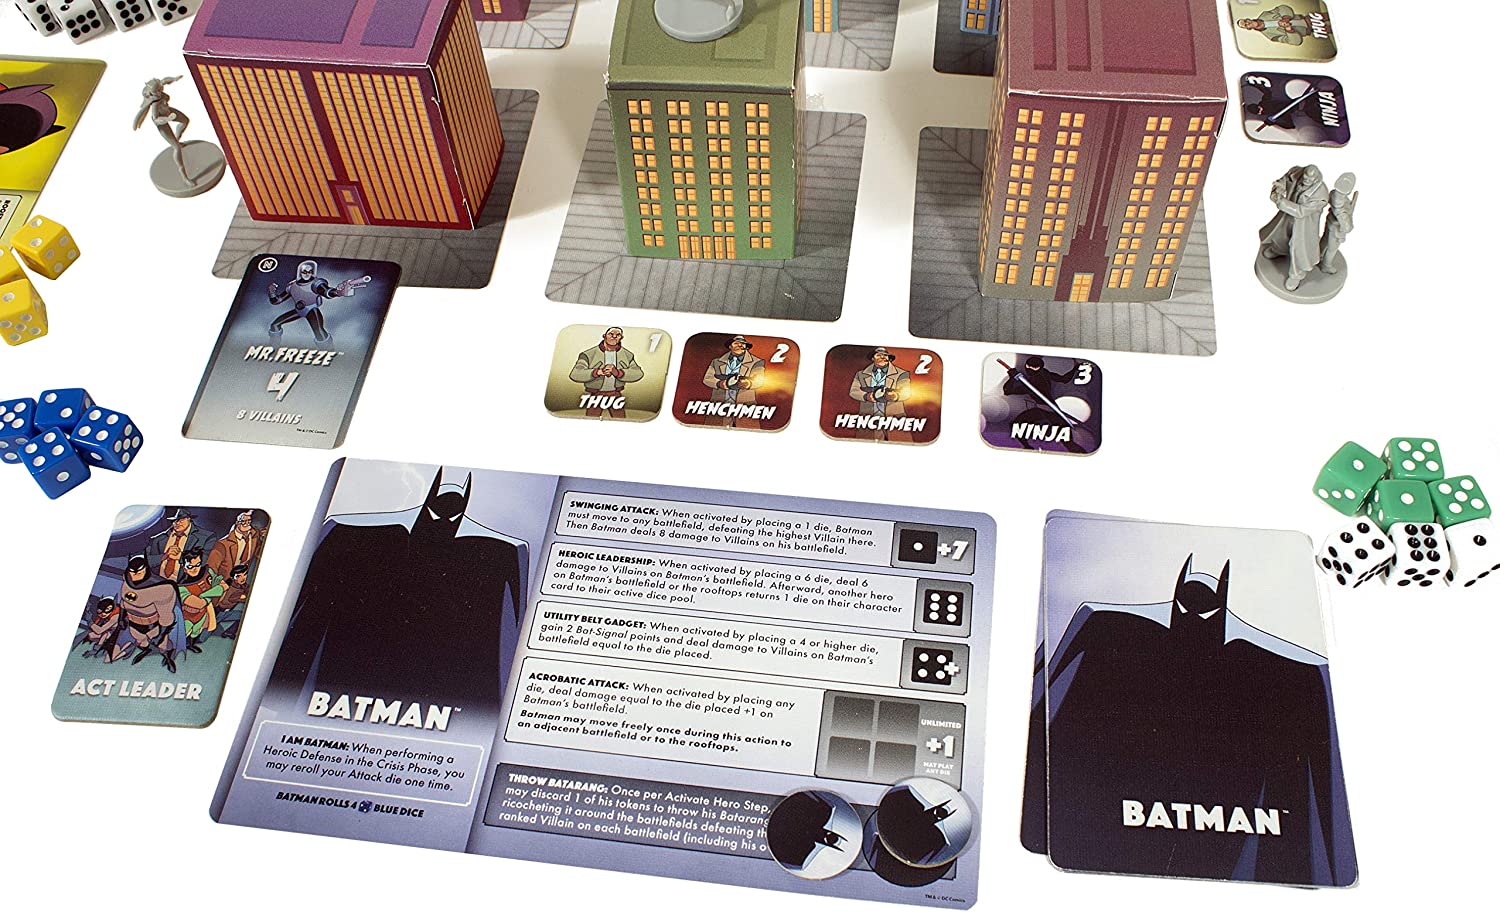 IDW Games 1537Idw Batman: The Animated Series-Gotham City Under Seige Game (JUN180756) , Black